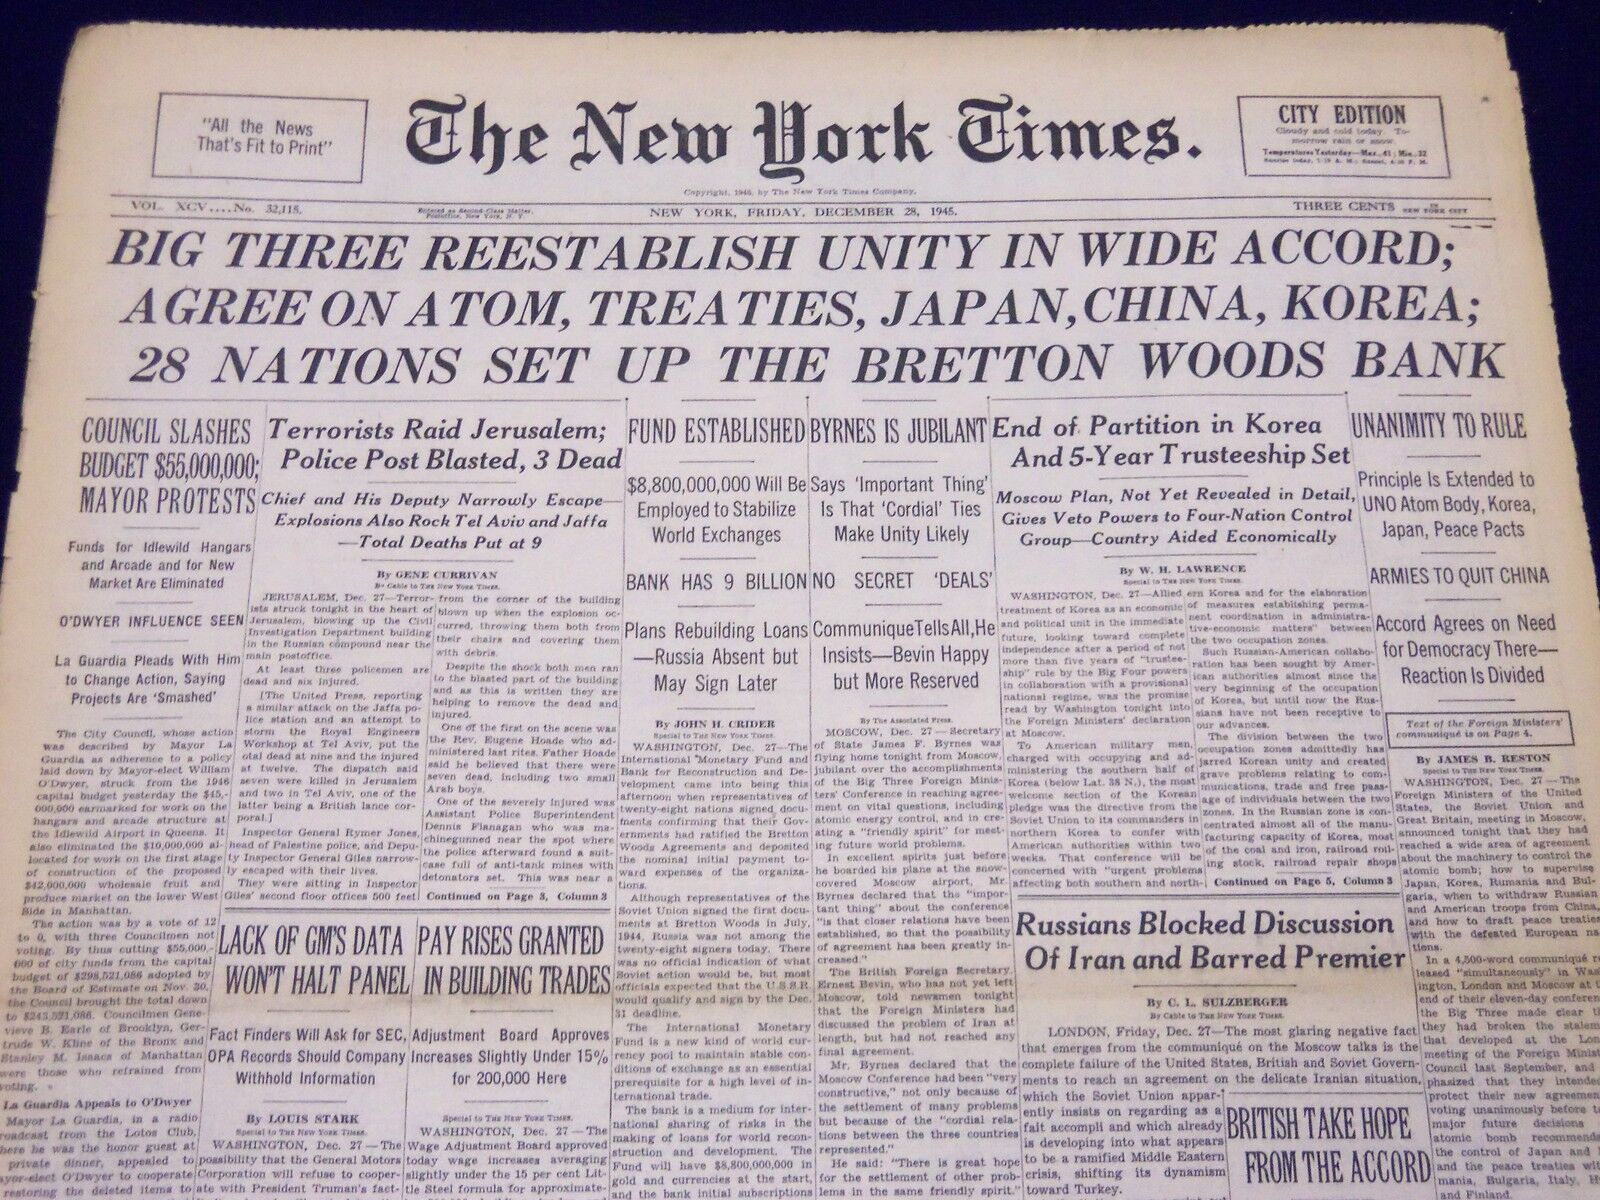 1945 DECEMBER 28 NEW YORK TIMES - BIG THREE REESTABLISH UNITY IN ACCORD - NT 268